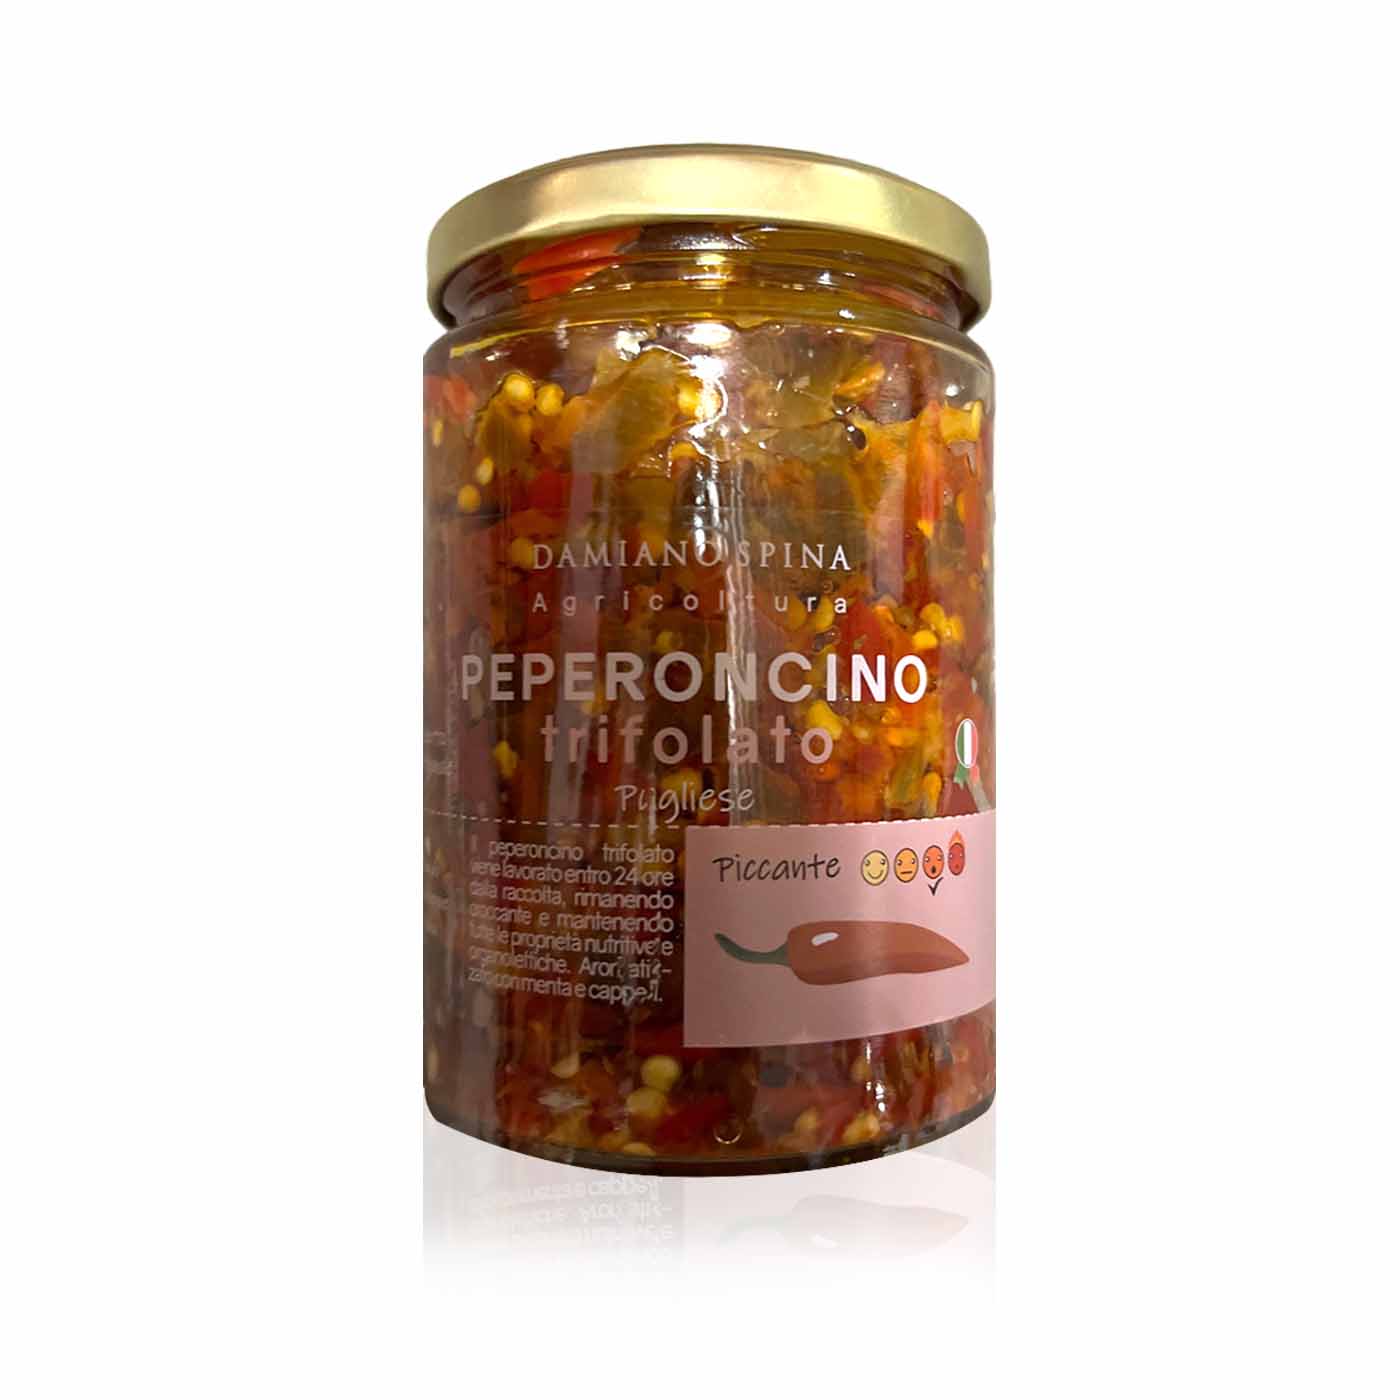 DAMIANO SPINA Peperoncino trifolato- Chili geschrotet in Öl- 0,33kg